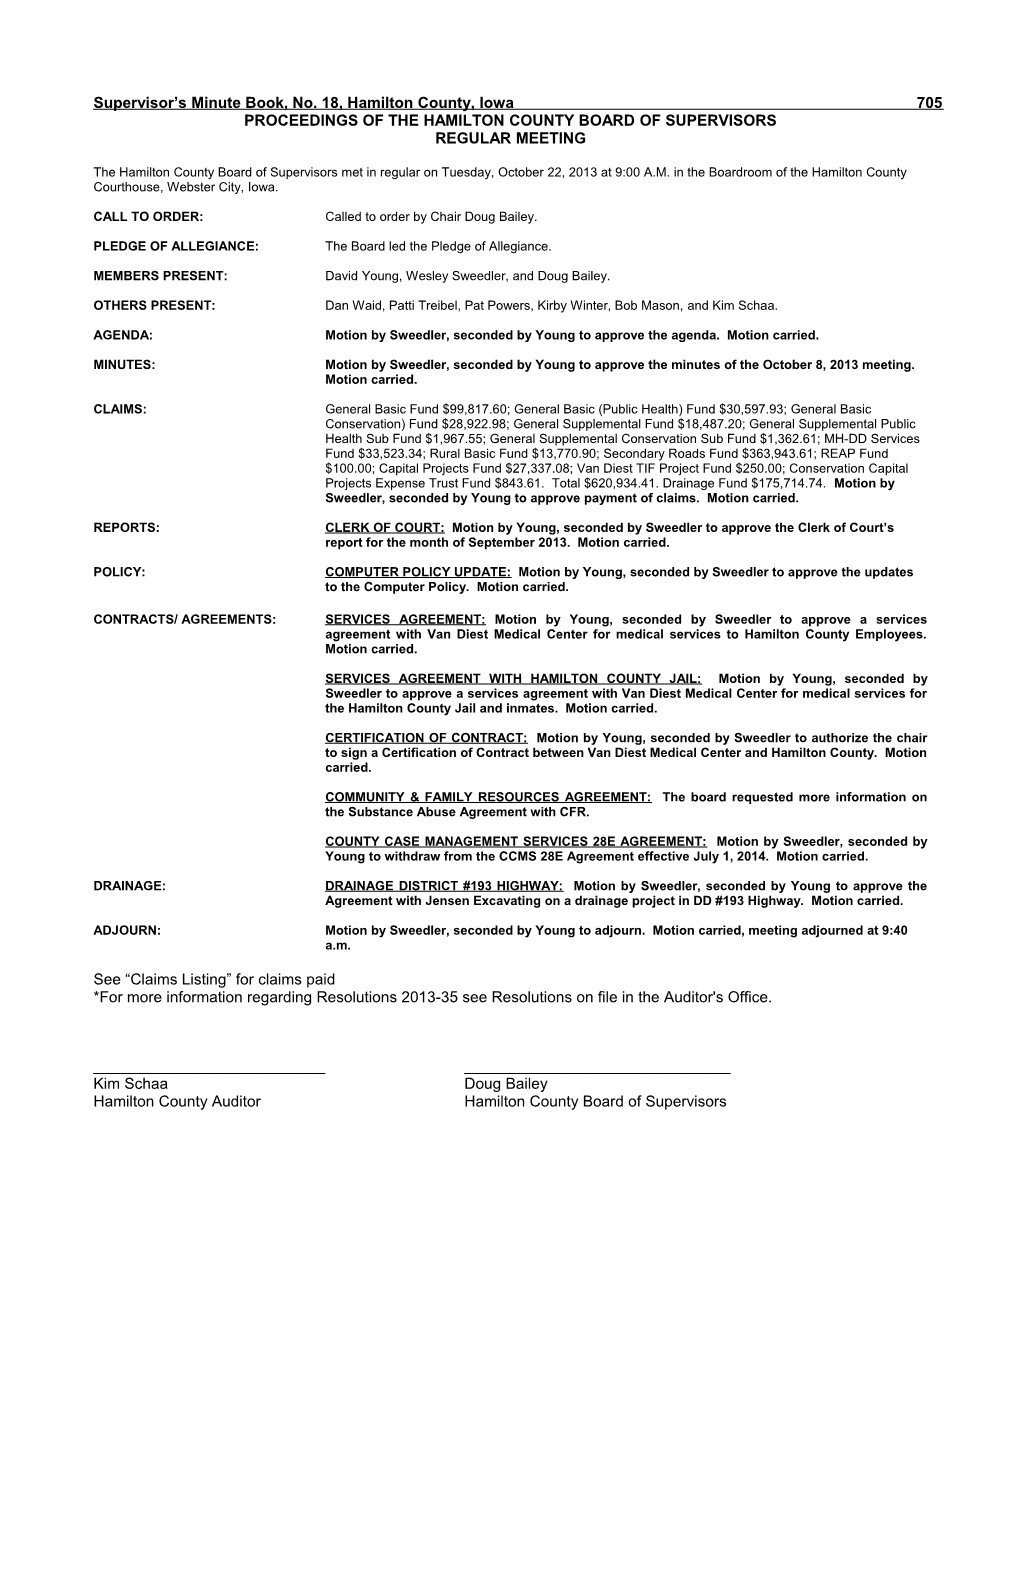 Proceedings of the Hamilton County Board of Suervisors s3